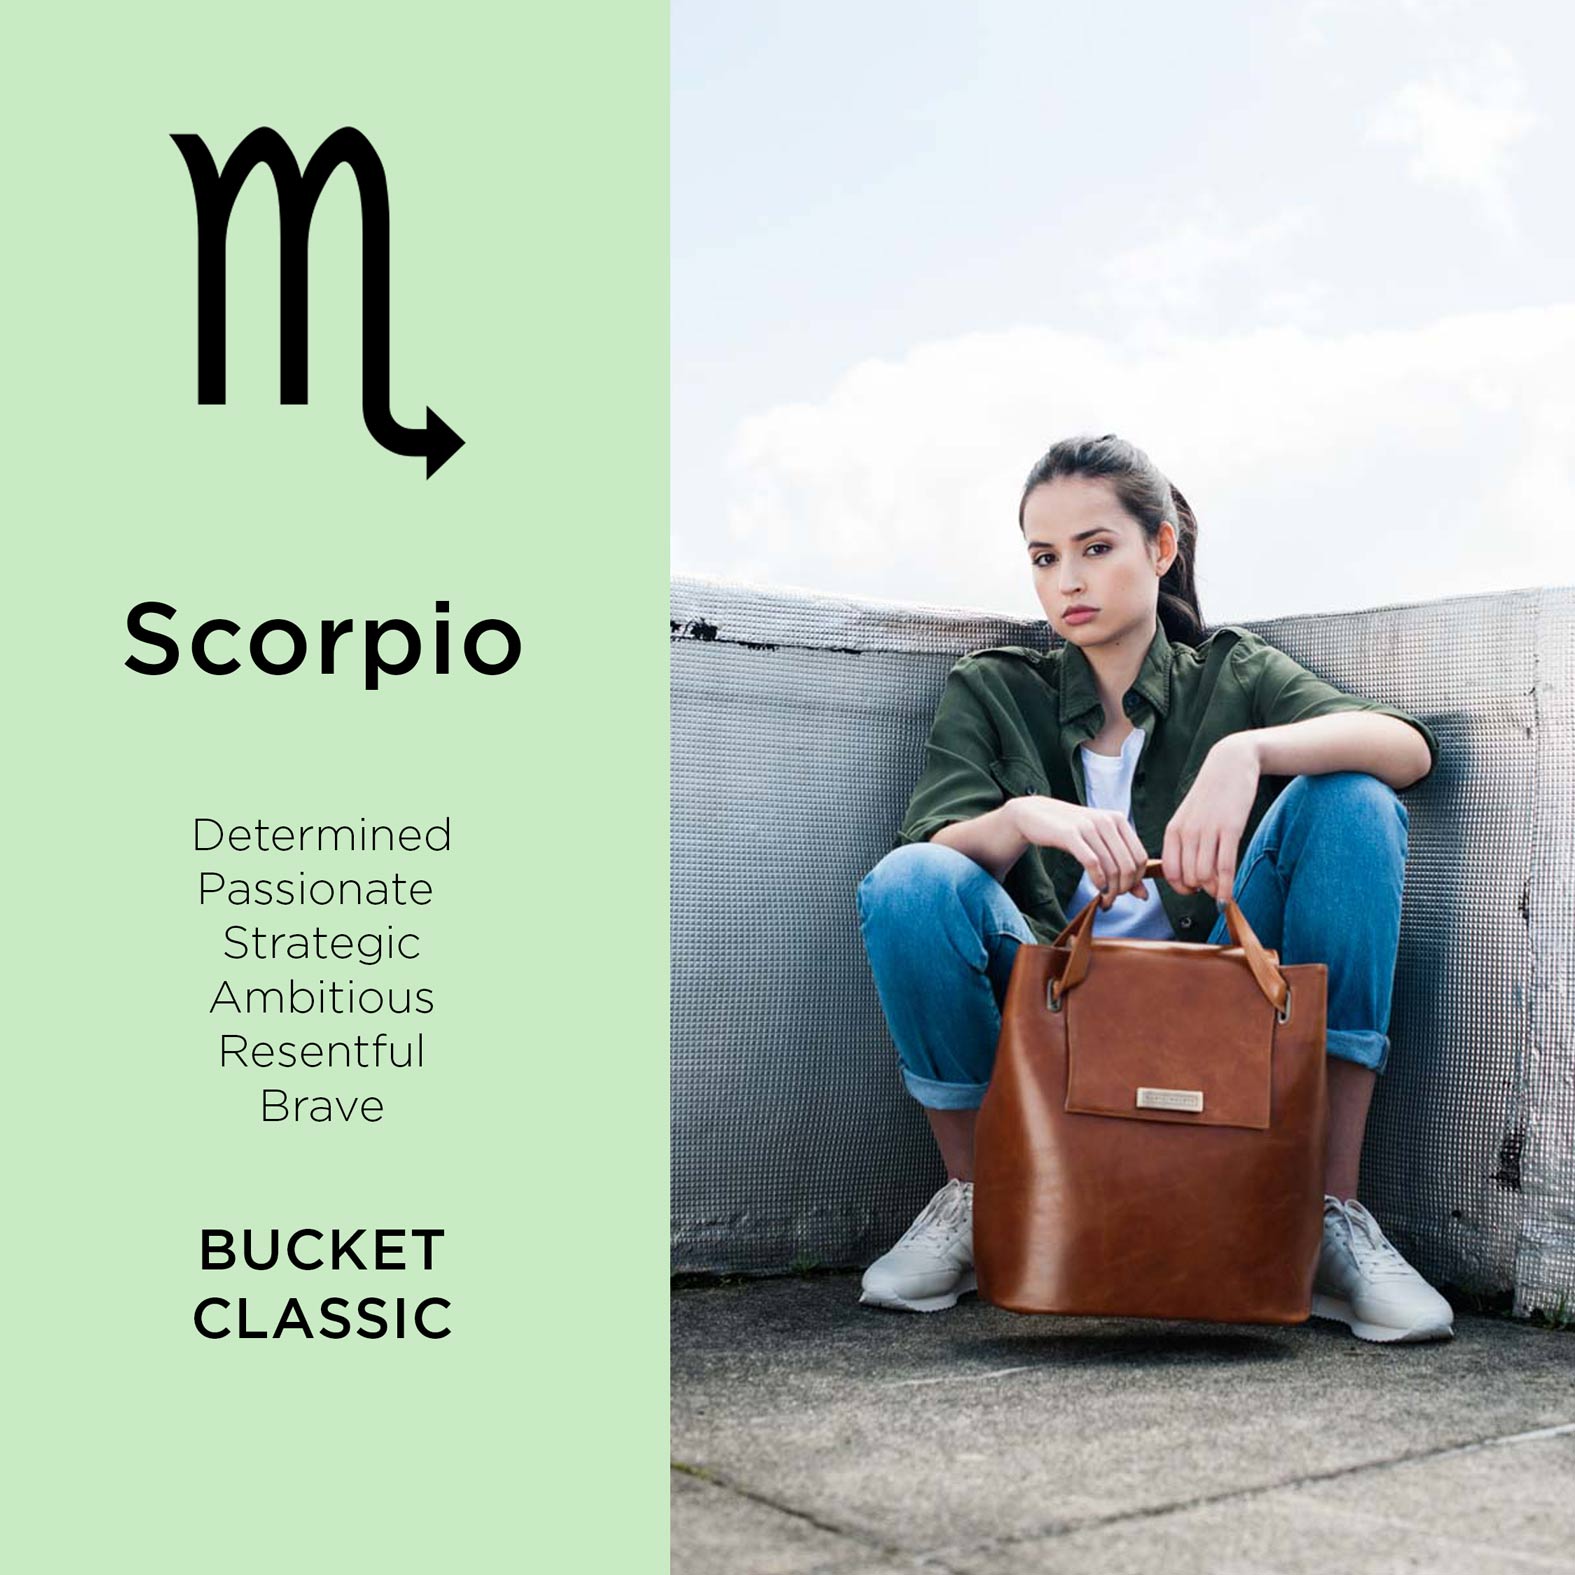 bag for the Scorpio Woman!